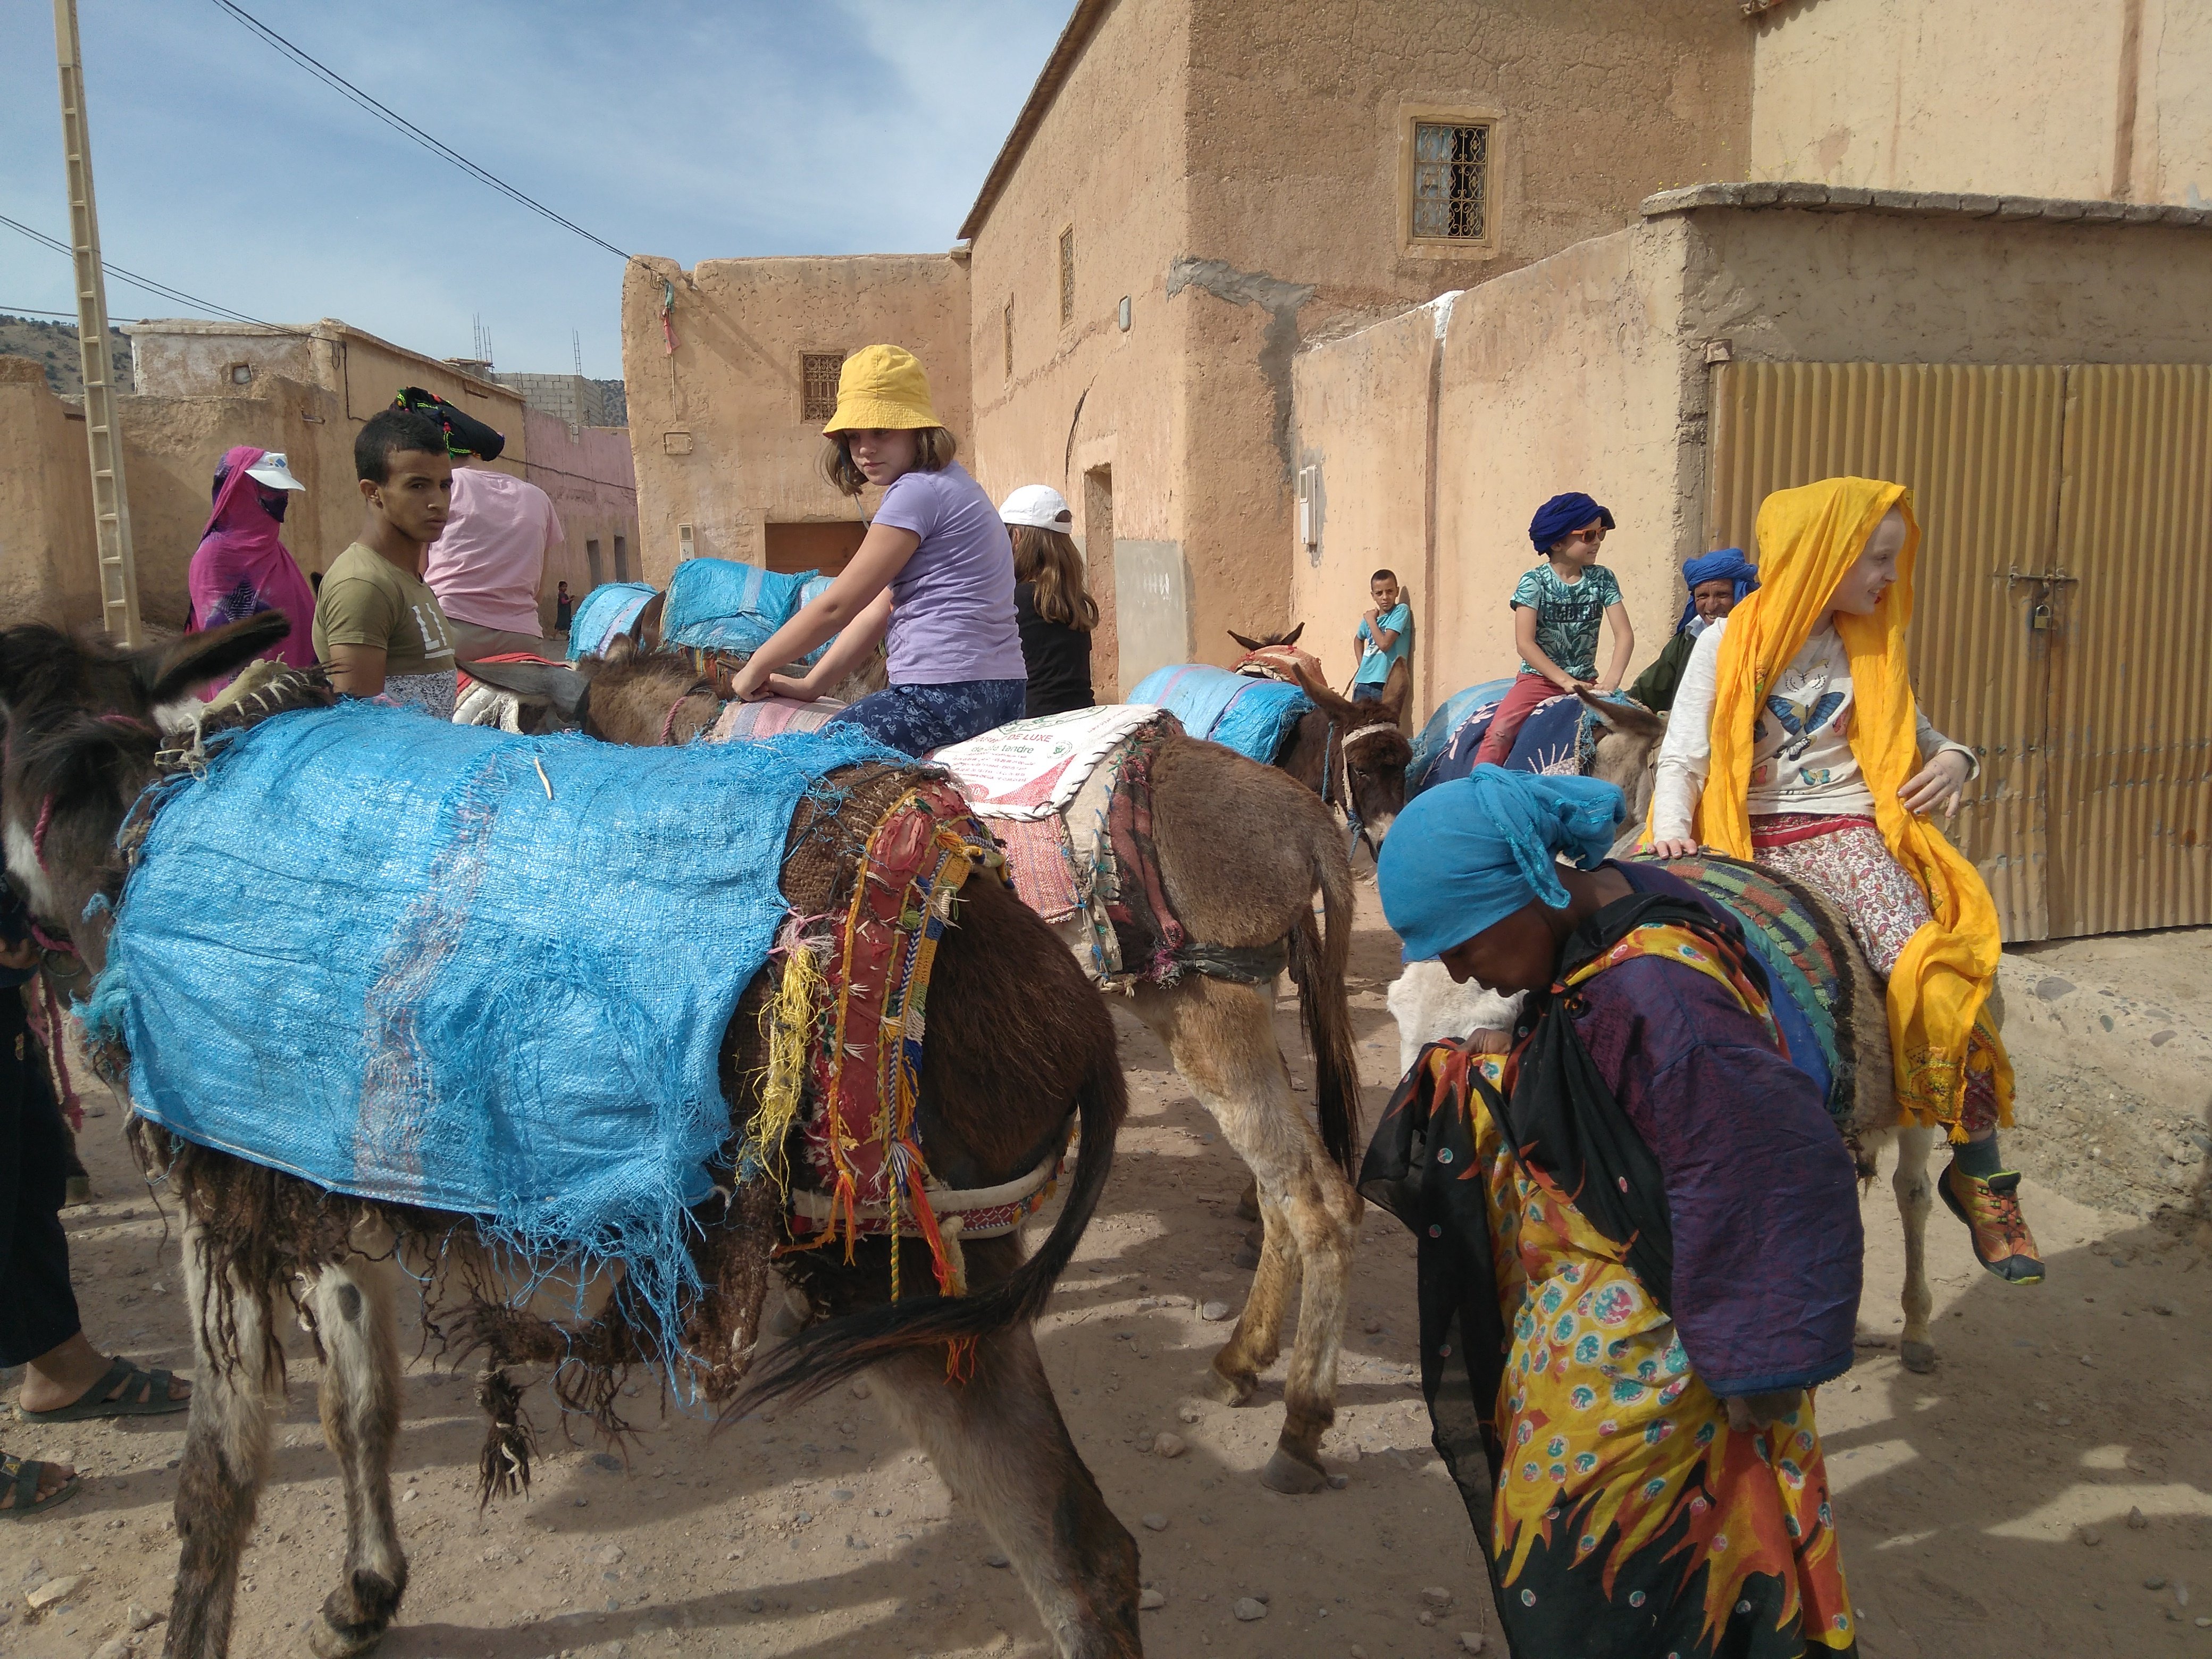 Marokko mit Kindern - Reisebericht Marokko mit Kindern - Esel reiten